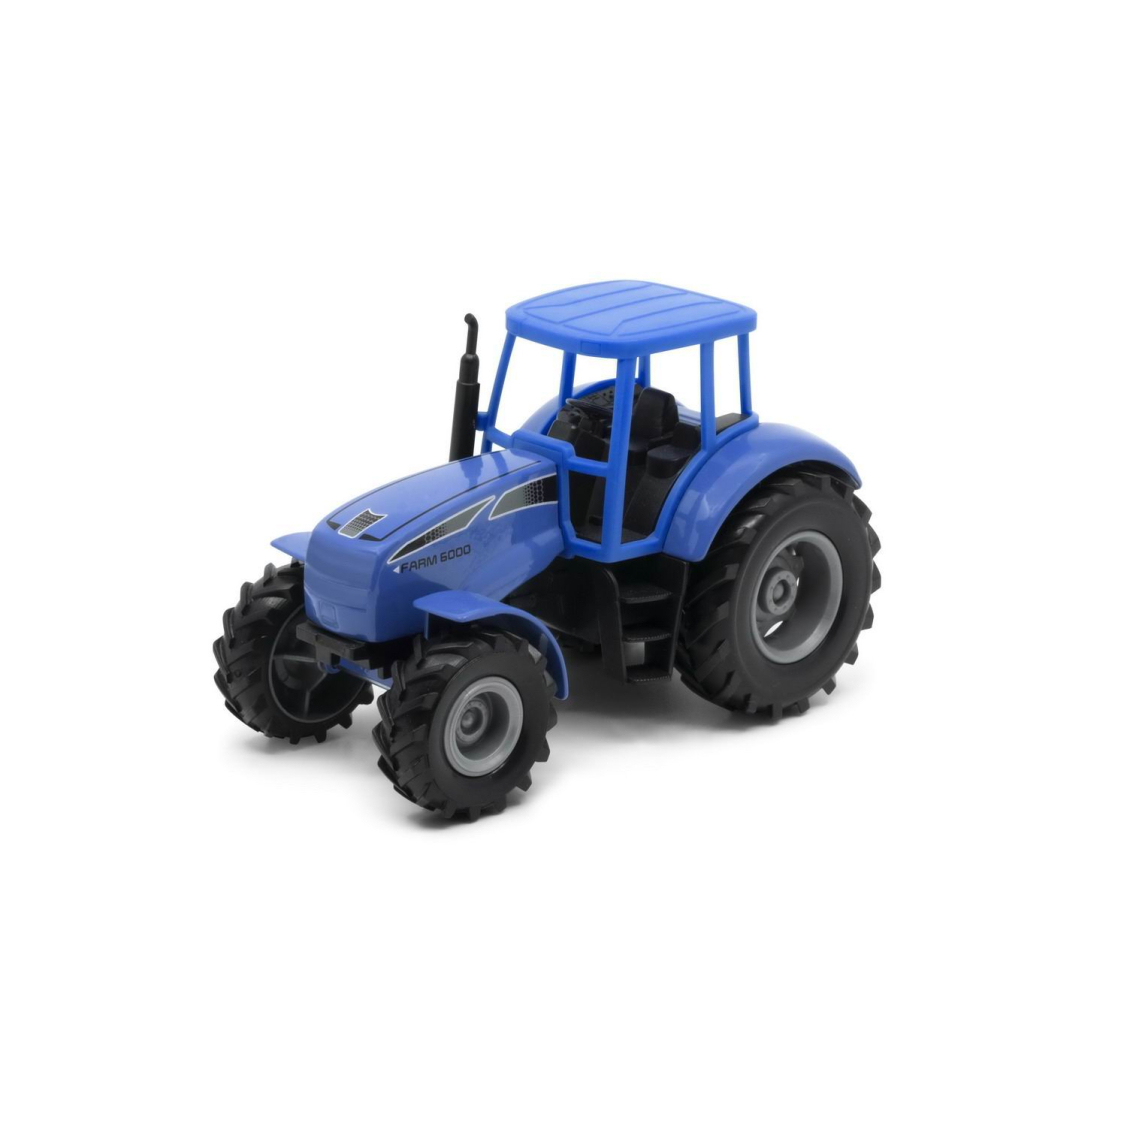 Машинка Welly Трактор синий машинка для гибкого трека flash track с зацепами для петли синий